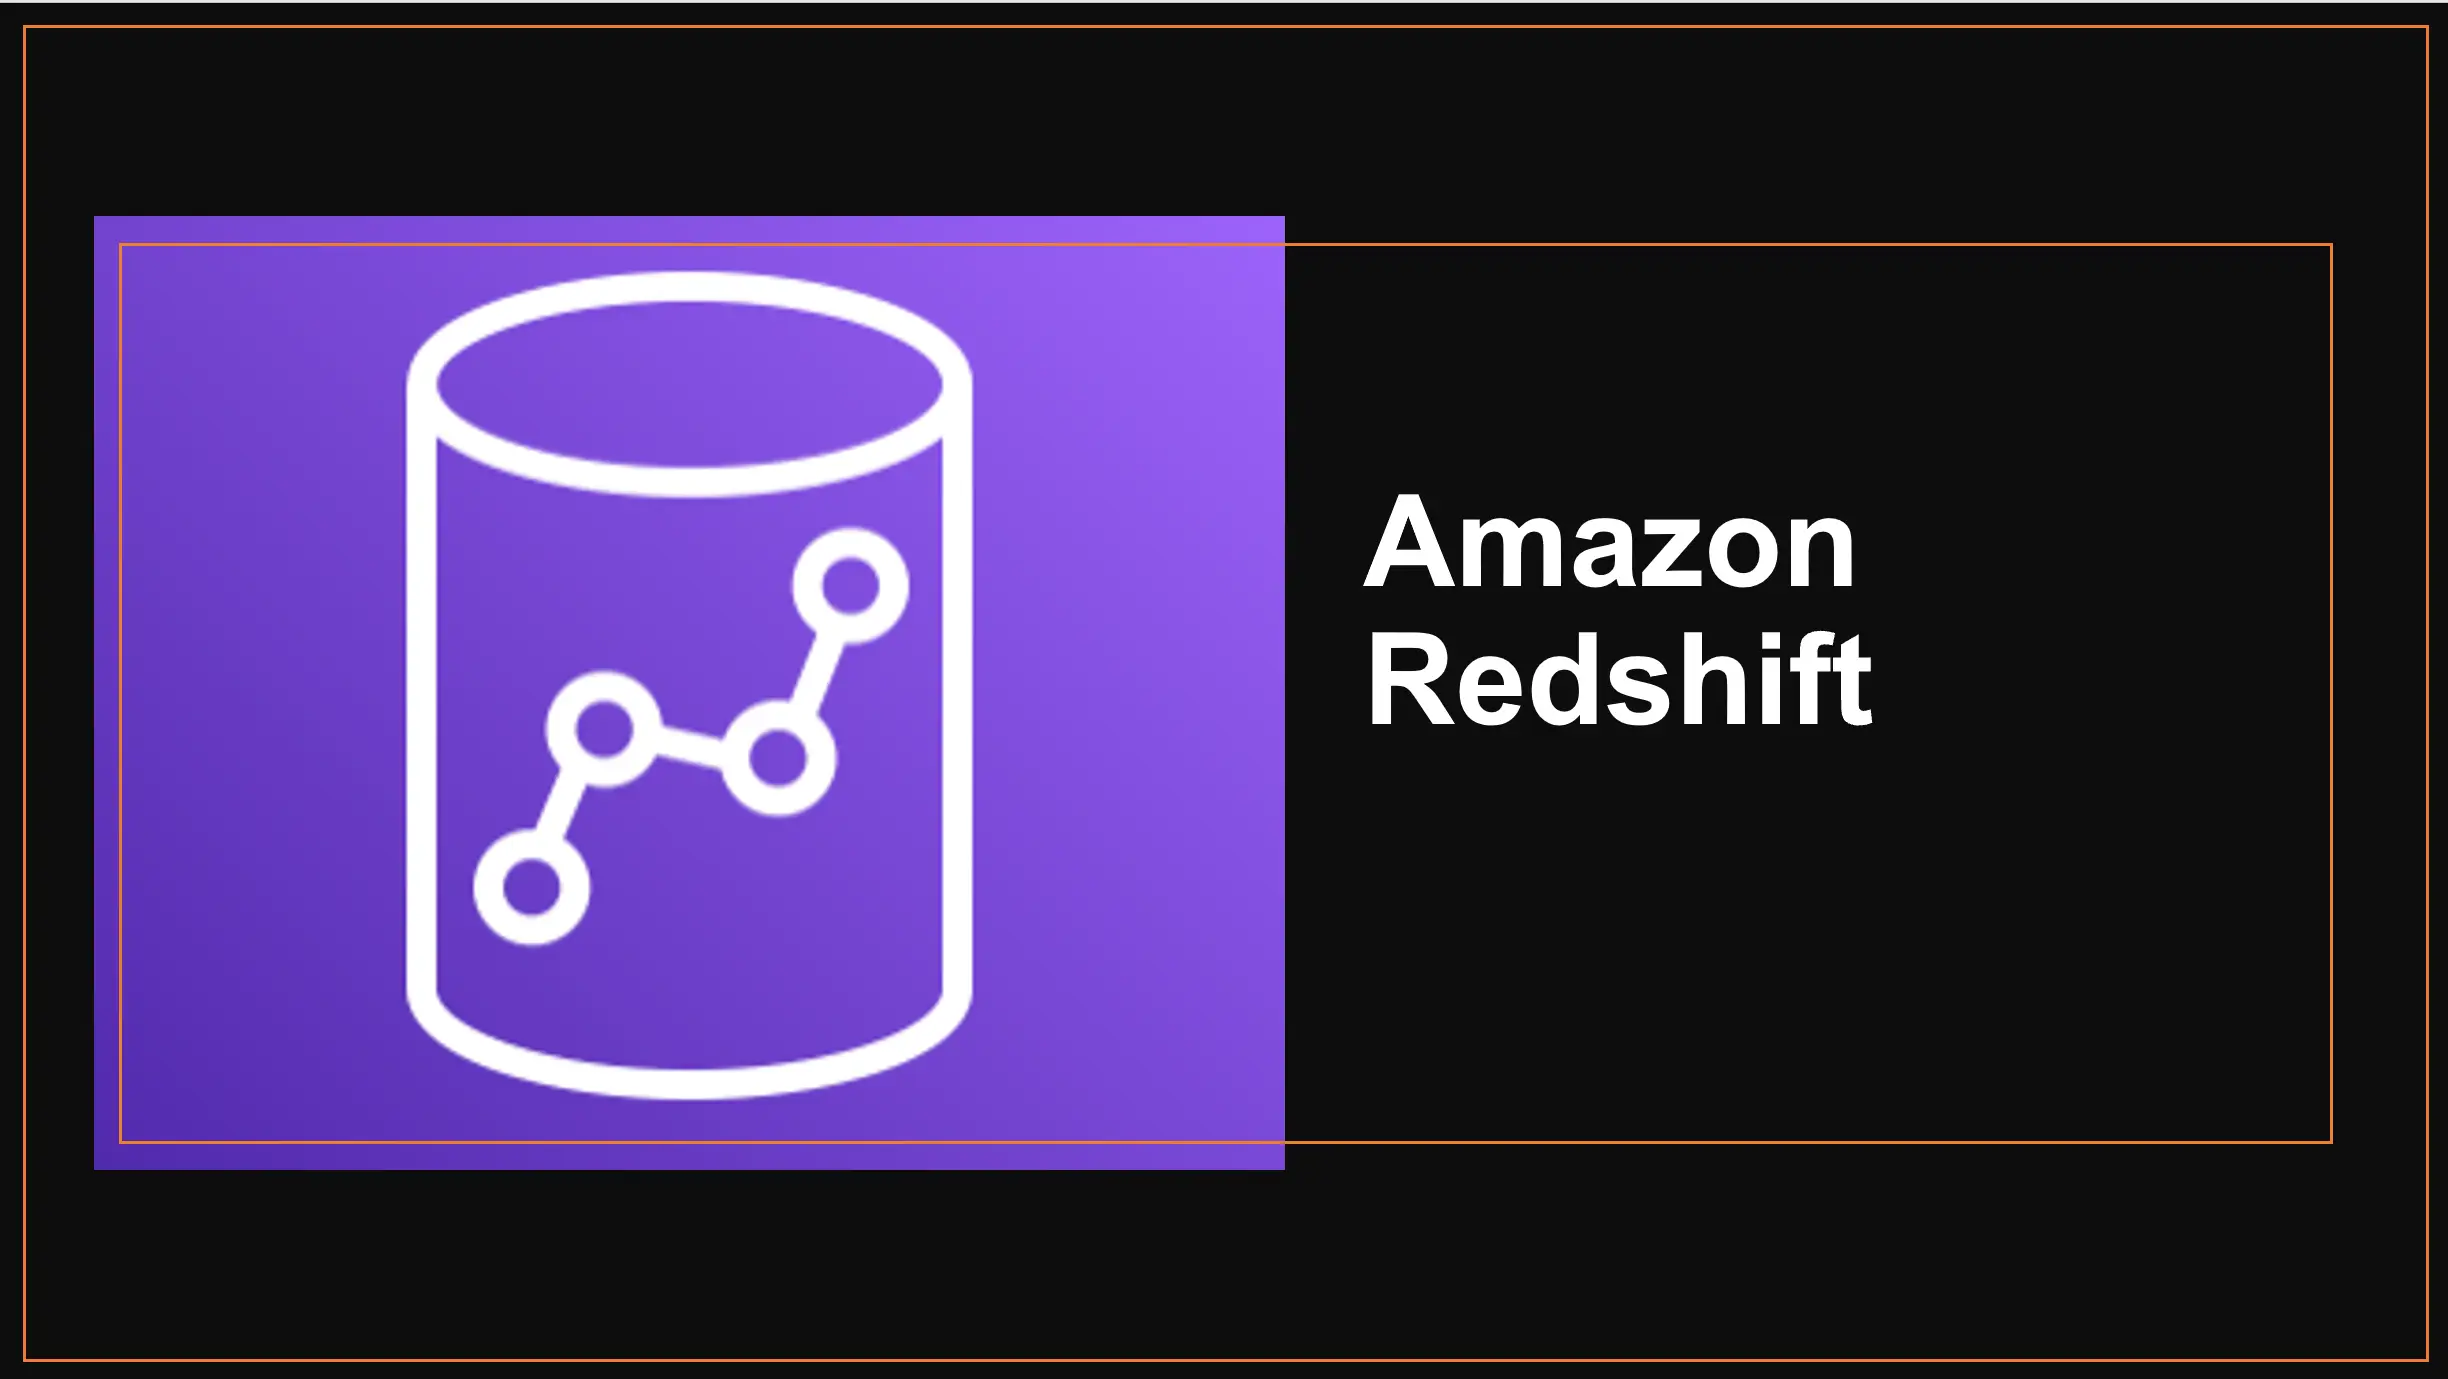 Redshiftのメンテナンスウィンドウ時間帯にRedshiftが停止していた場合の挙動